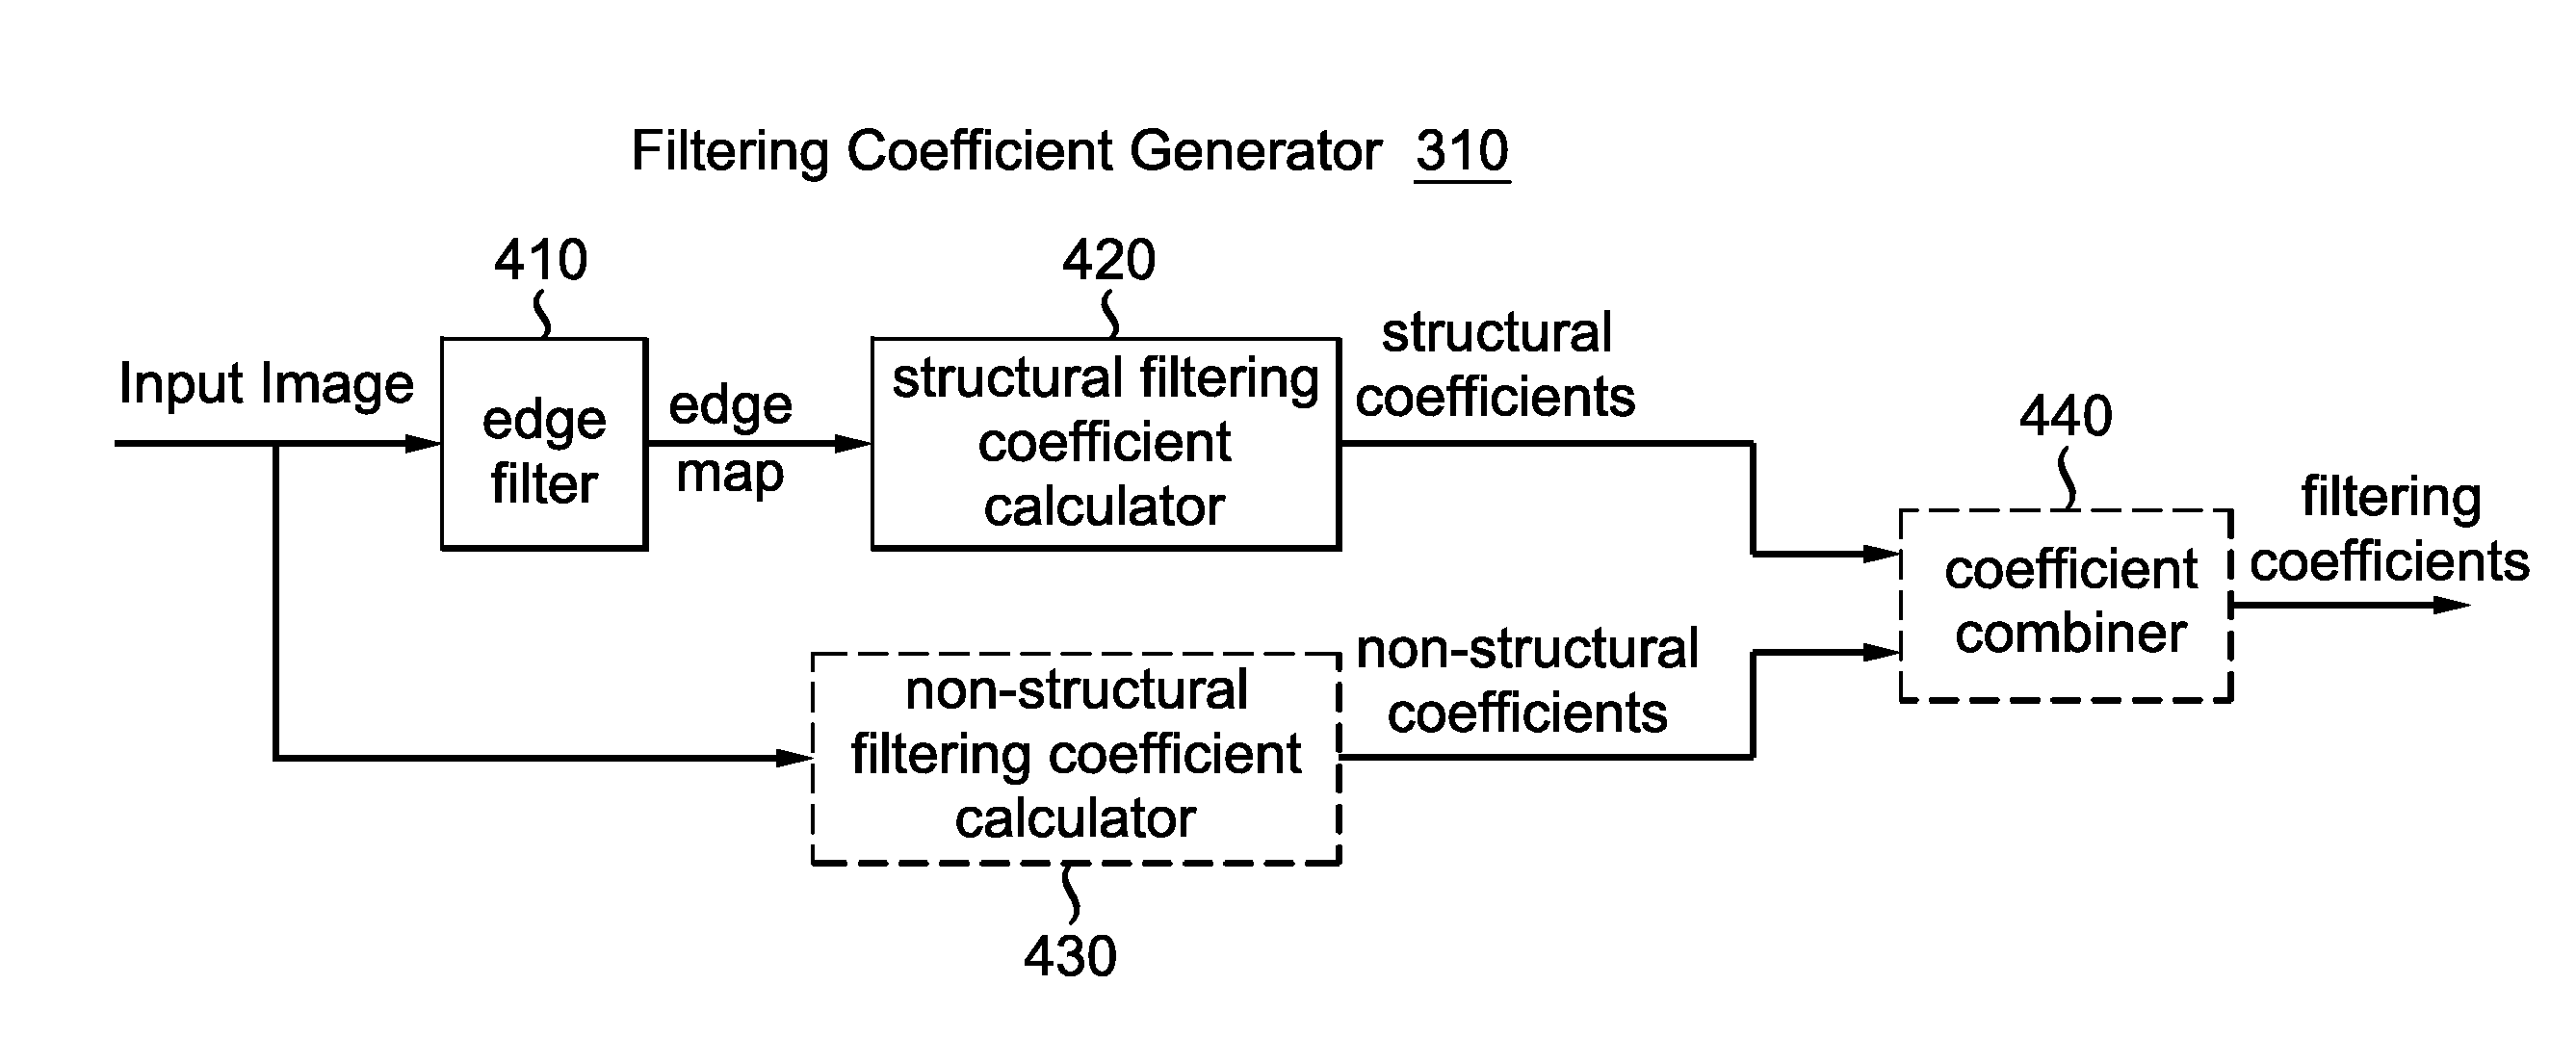 Image filtering based on structural information